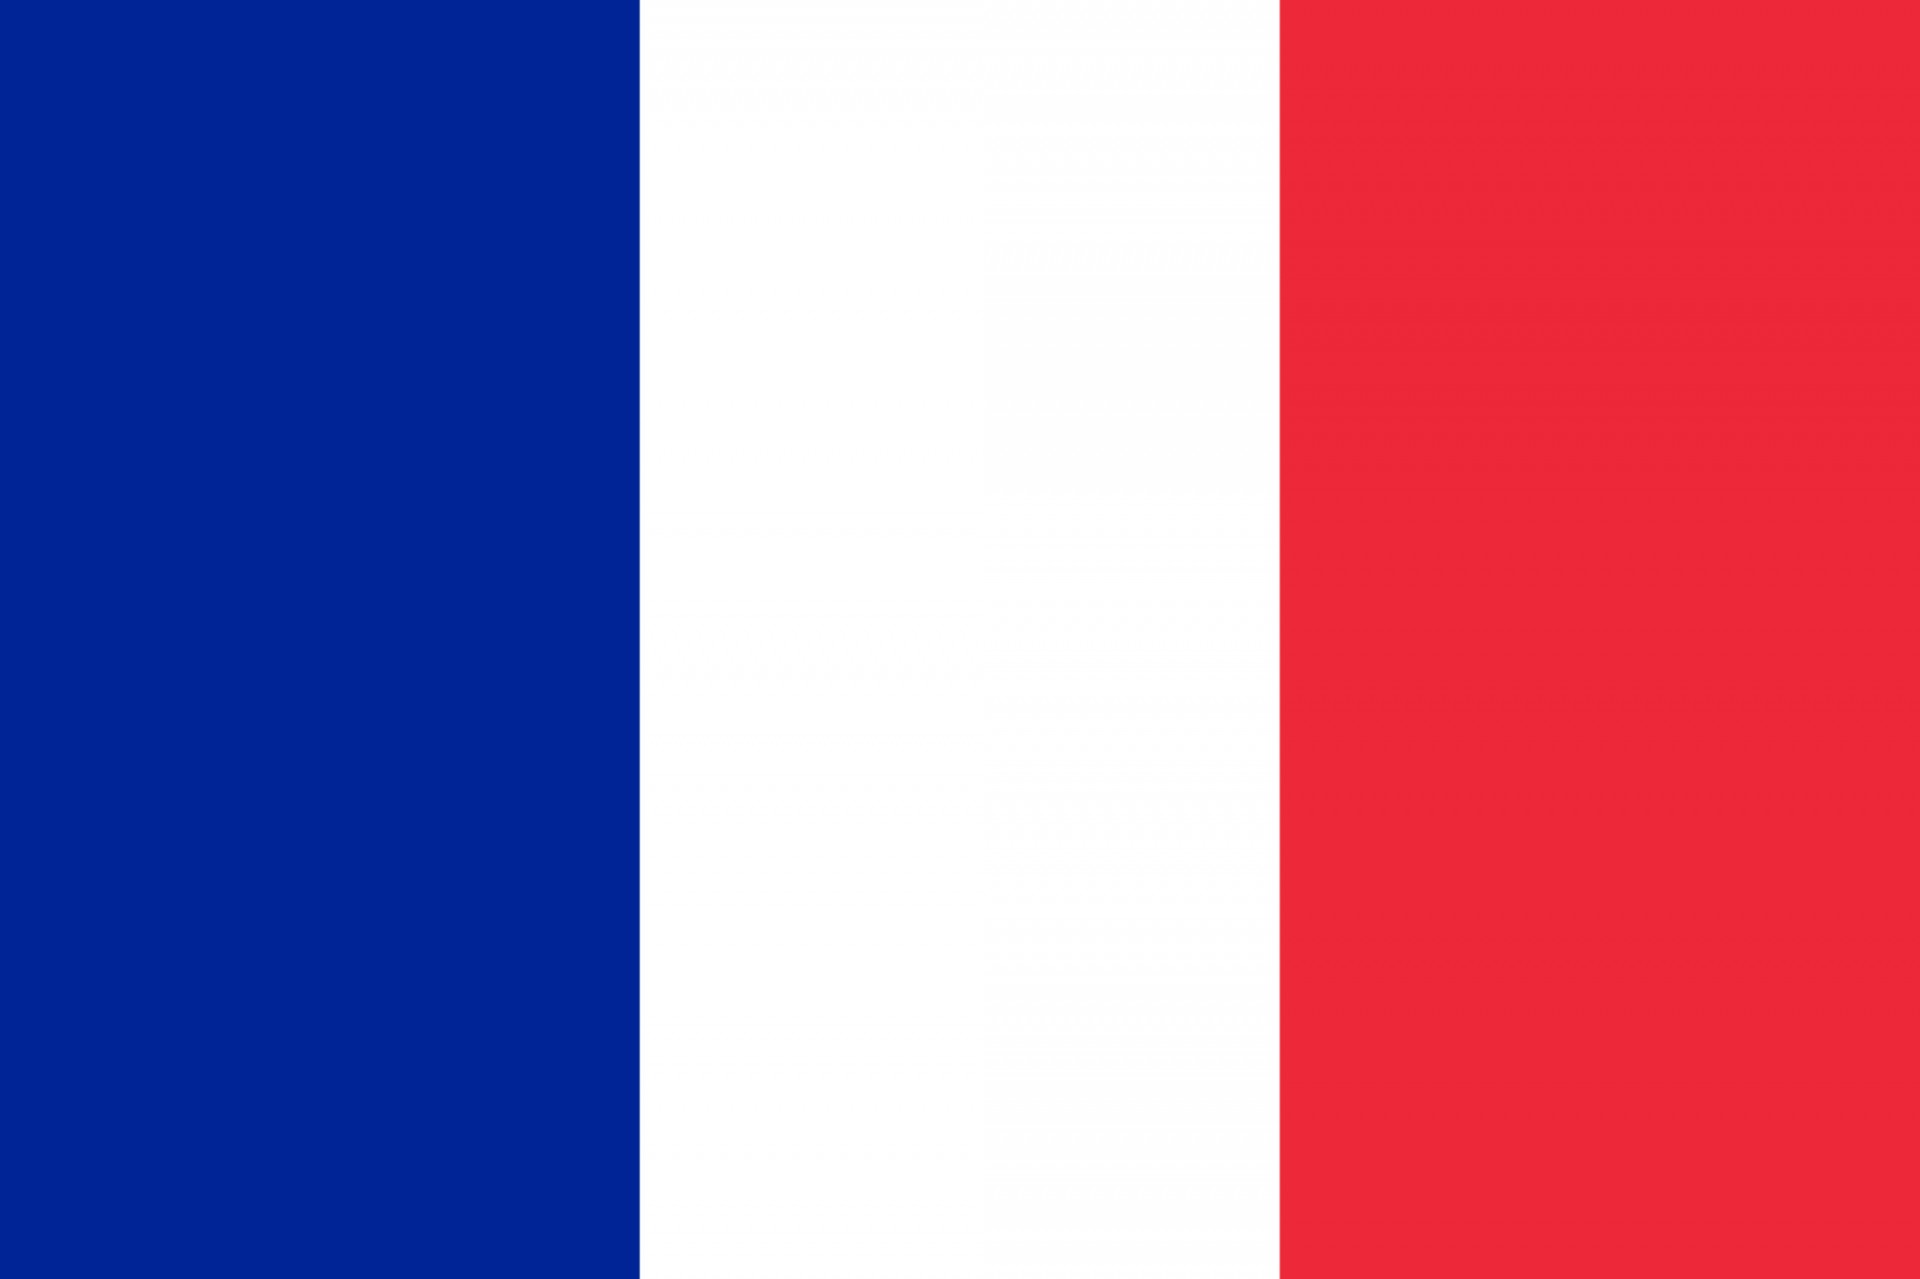 Flaga Francji Ikony Do Pobrania Flagi Panstwpl Images